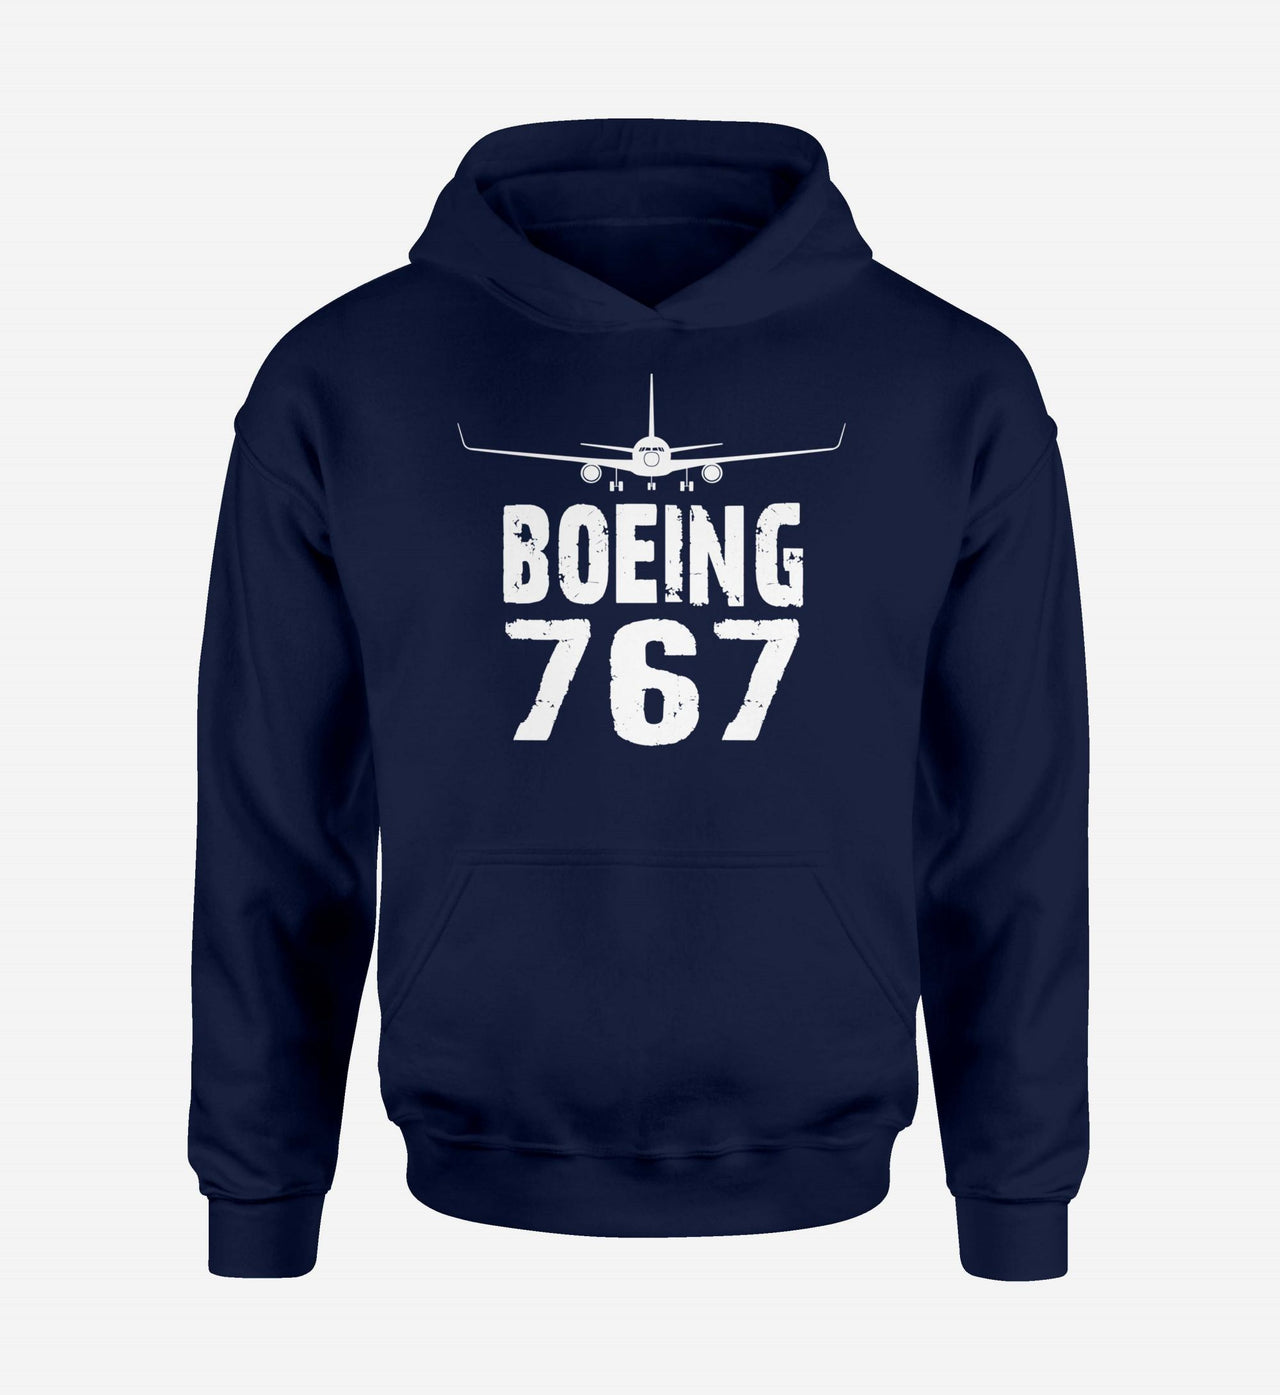 Boeing 767 & Plane Designed Hoodies